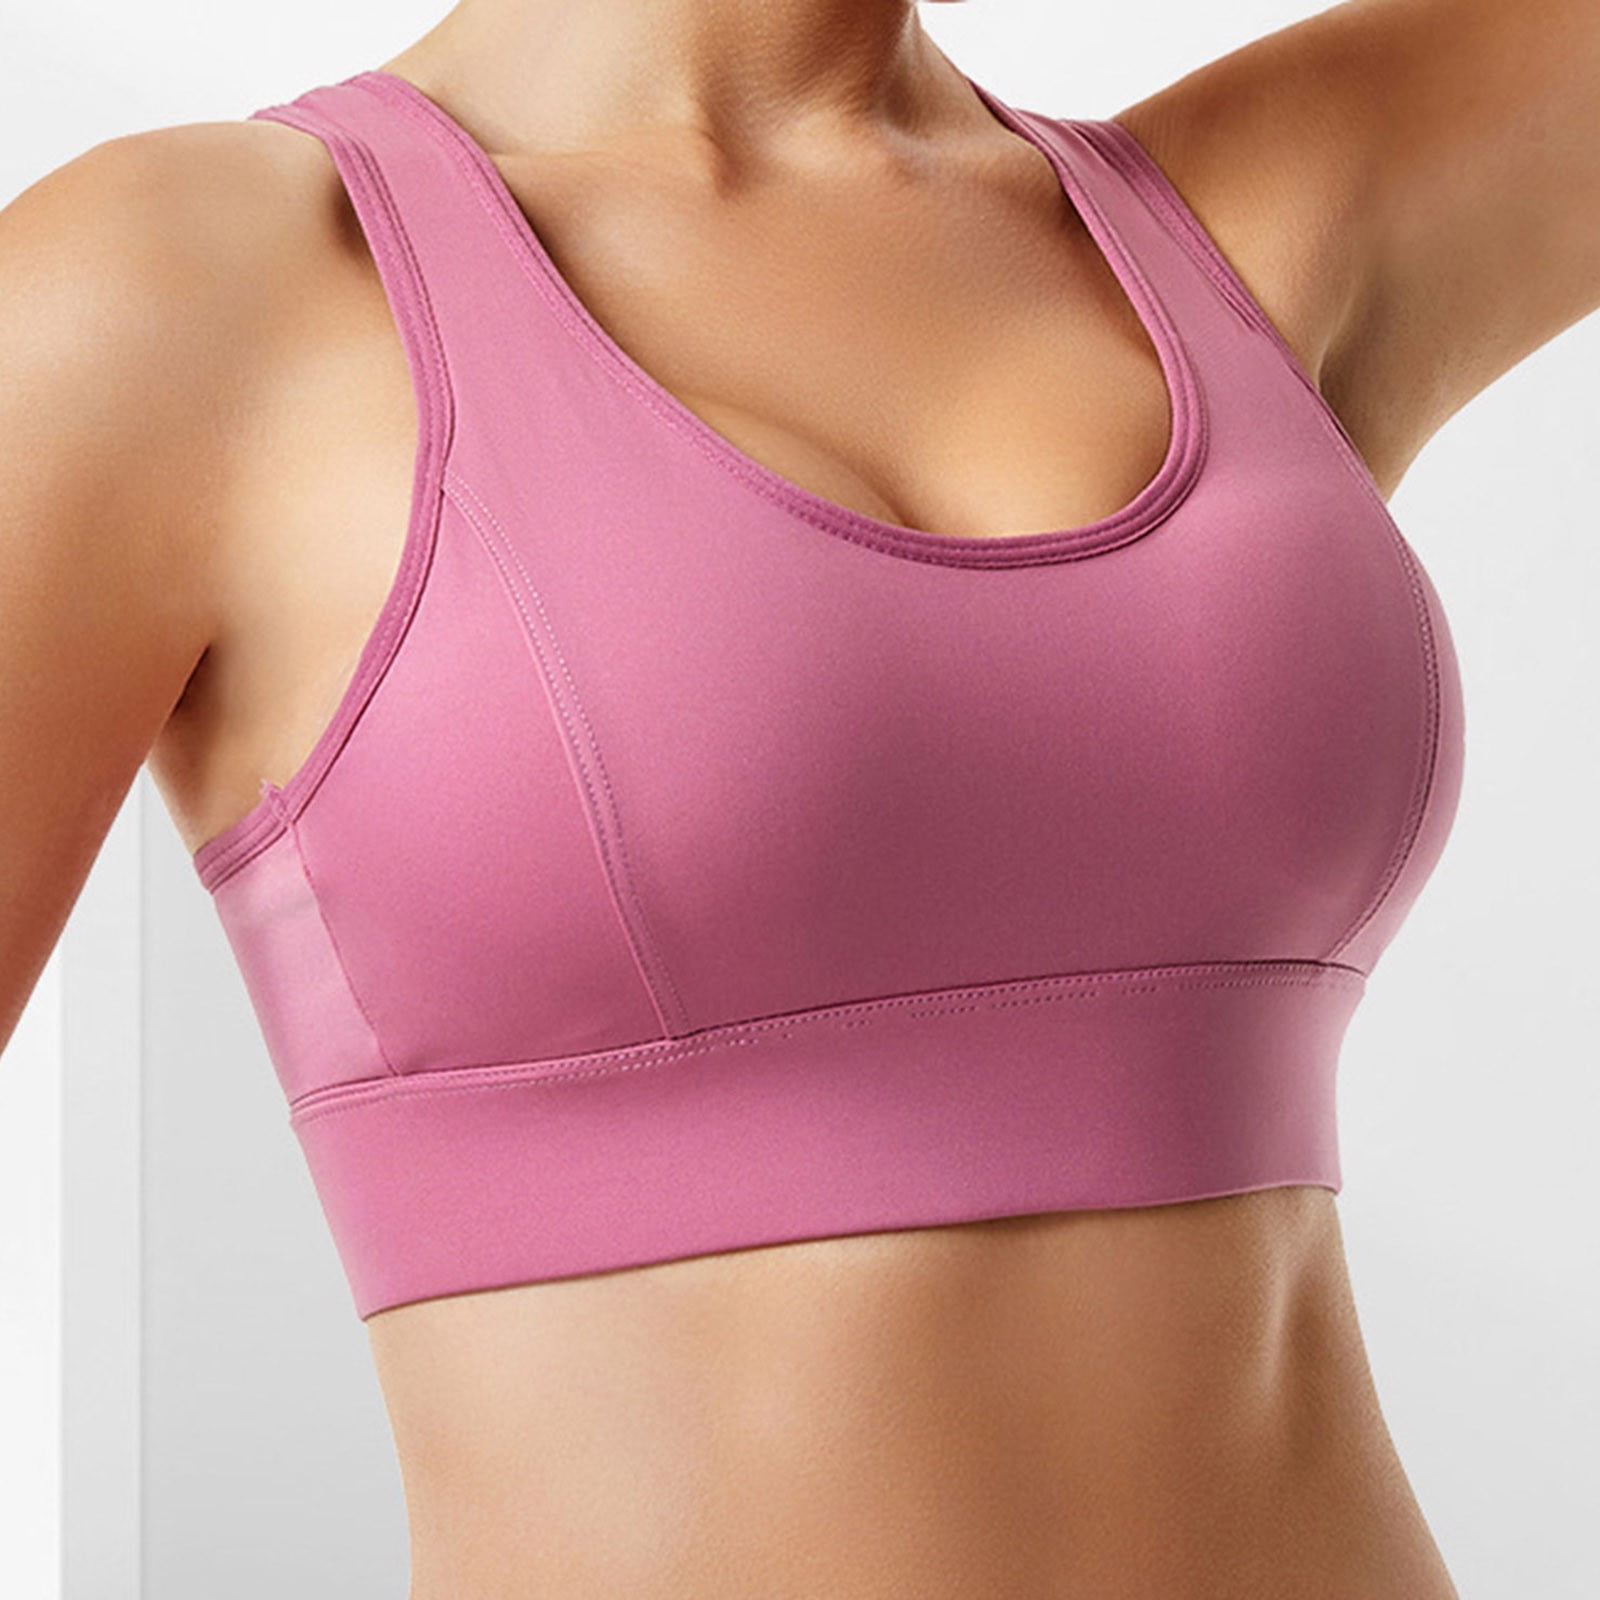 Tdoqot Women's Seamless Raceback Front Closure High Impact Zip up Cotton  linen Sports Bra Hot Pink Size XL